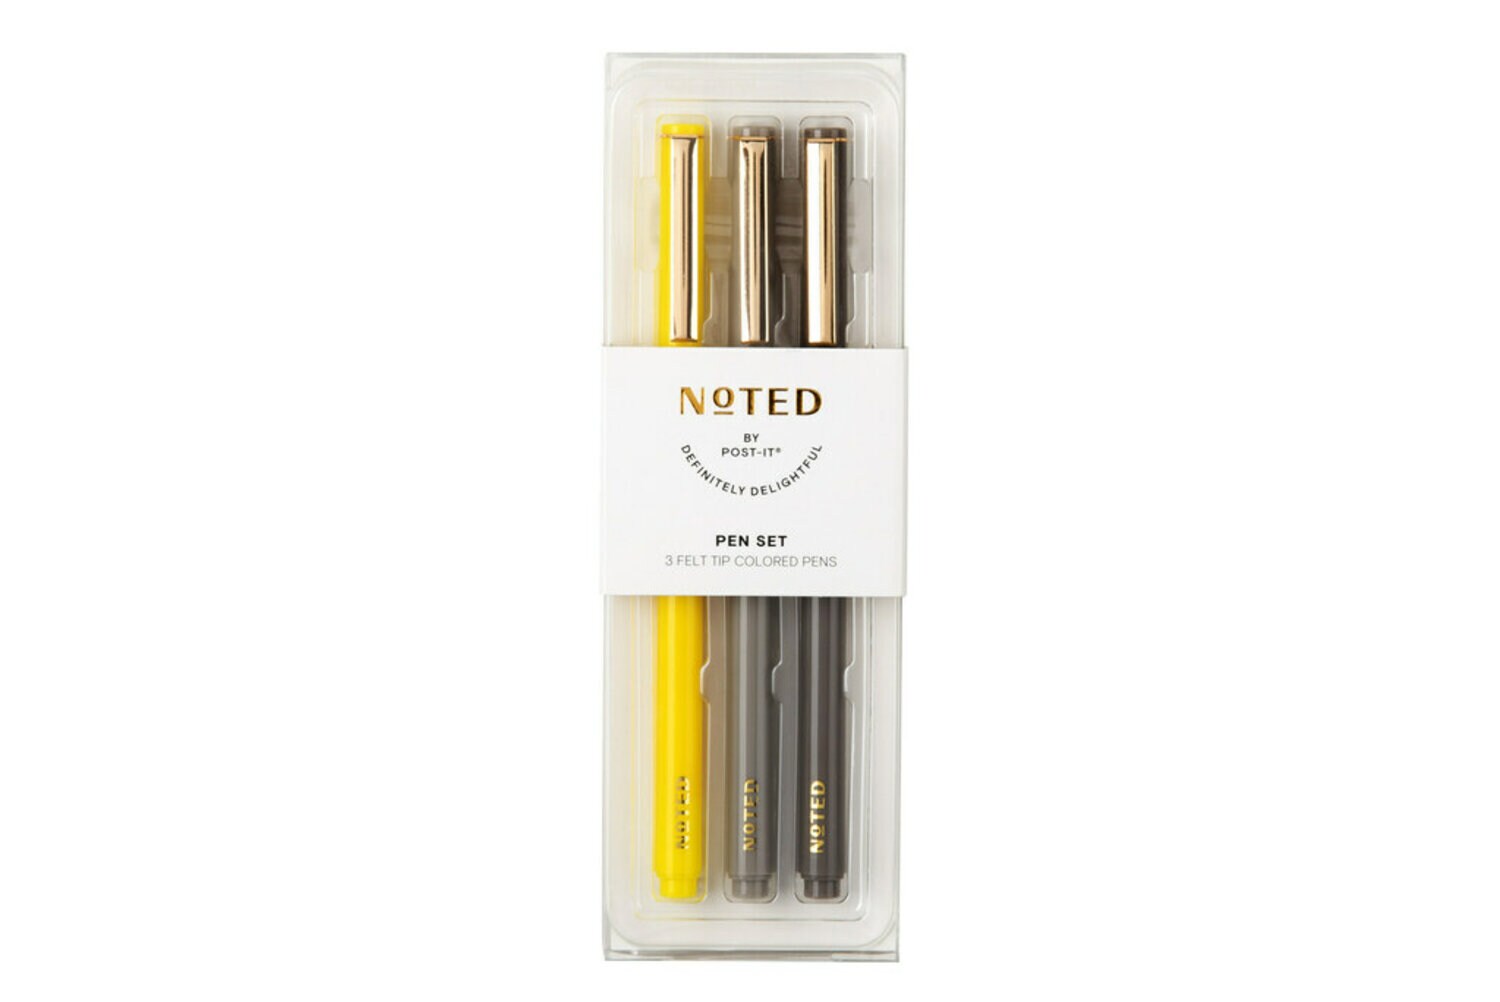 7100265113 - Post-it Pens NTD5-PEN-NT, 3 Pack